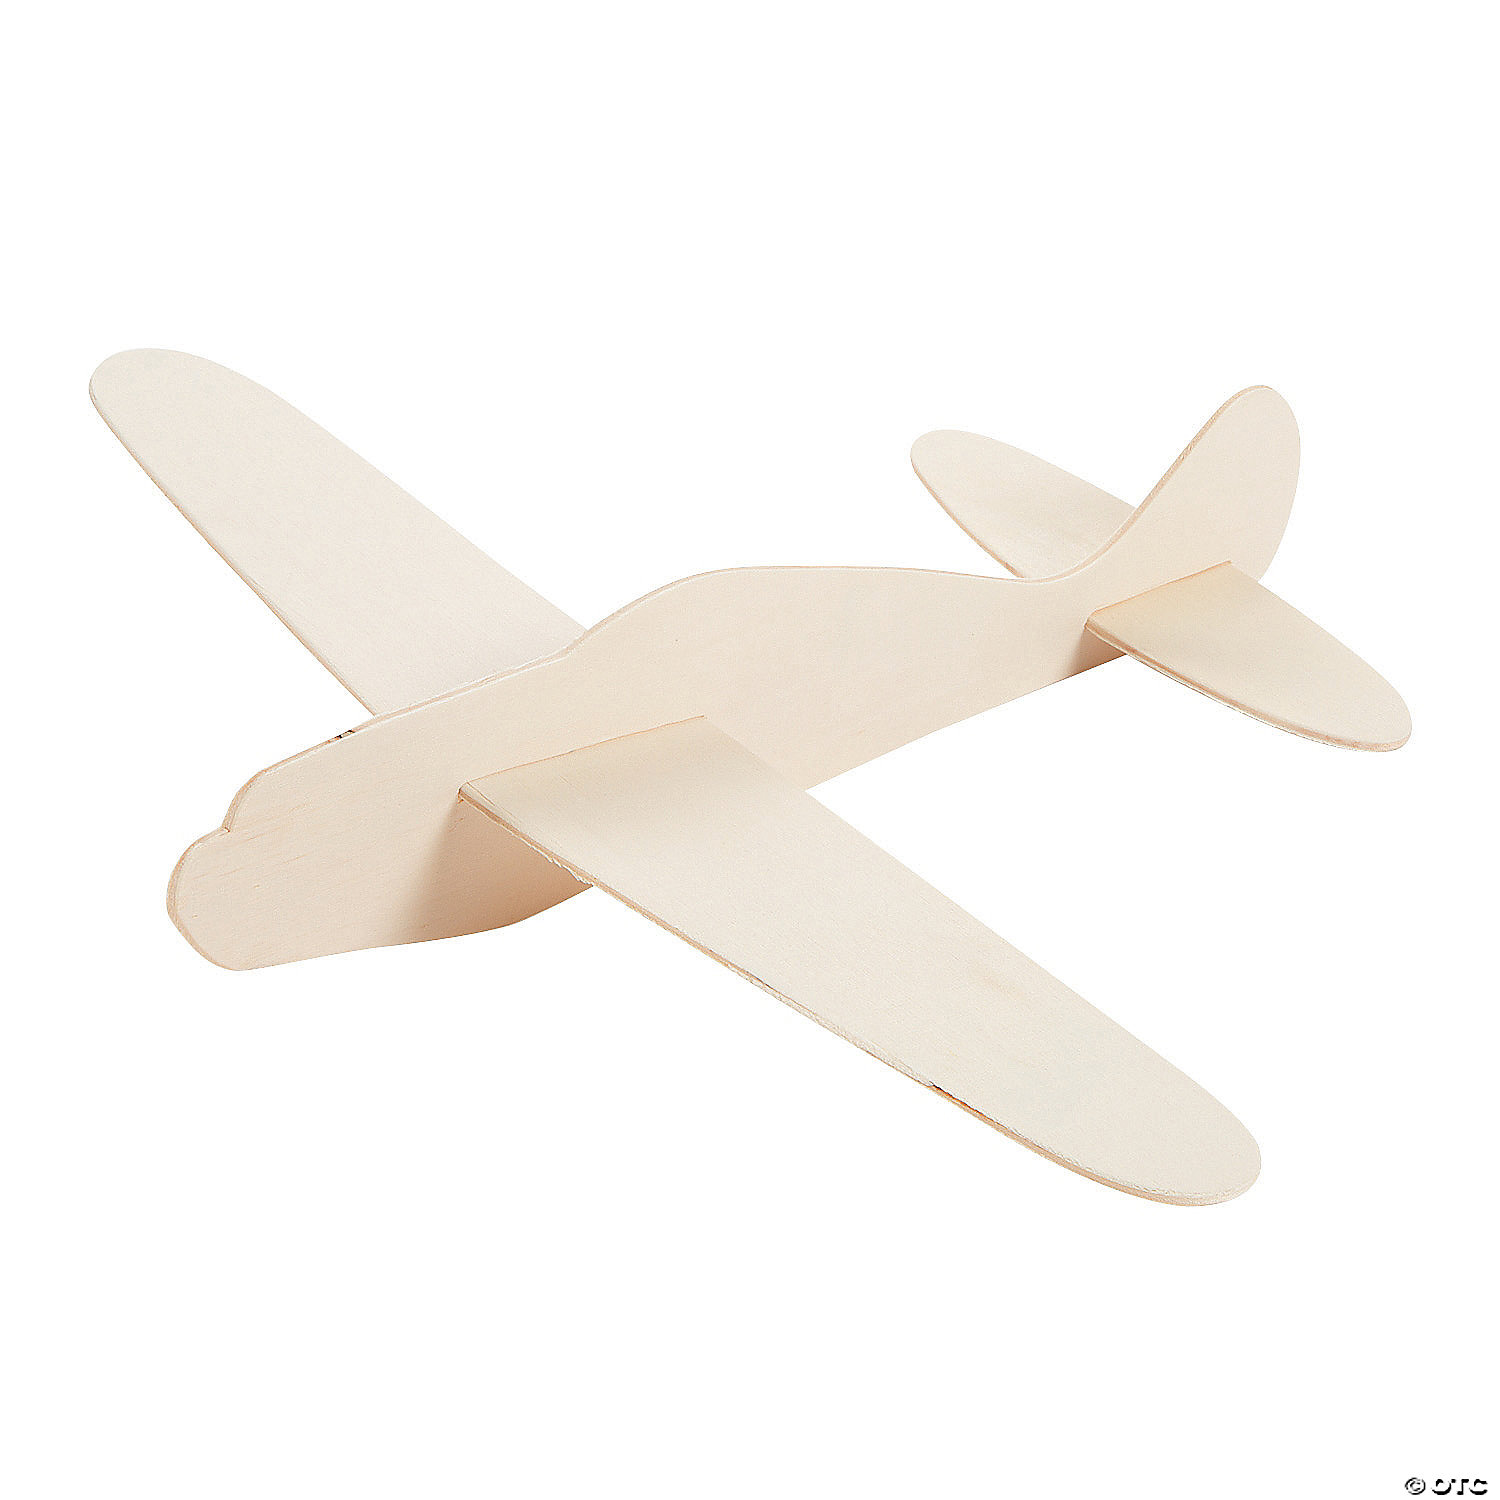 Wooden model plane